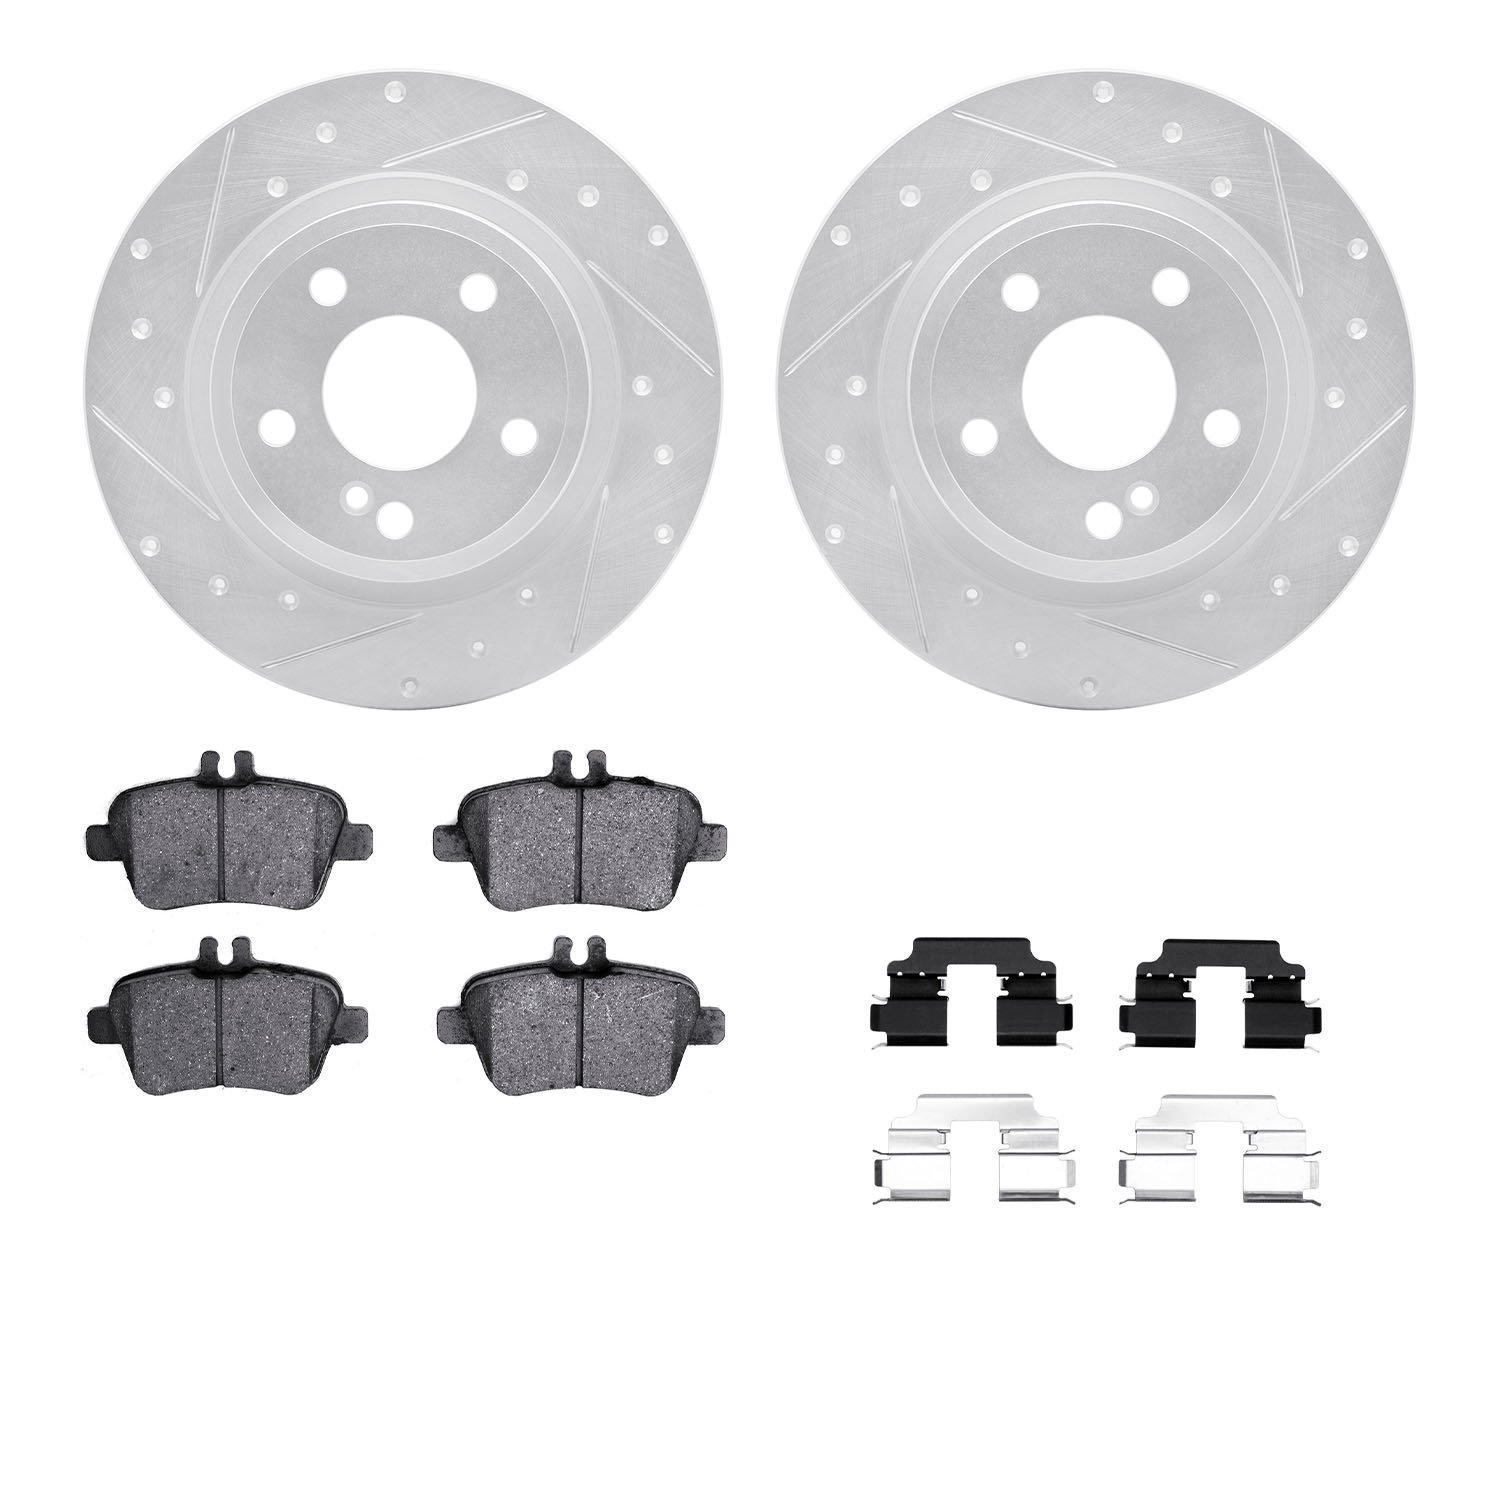 7312-63139 Drilled/Slotted Brake Rotor with 3000-Series Ceramic Brake Pads Kit & Hardware [Silver], 2014-2020 Multiple Makes/Mod